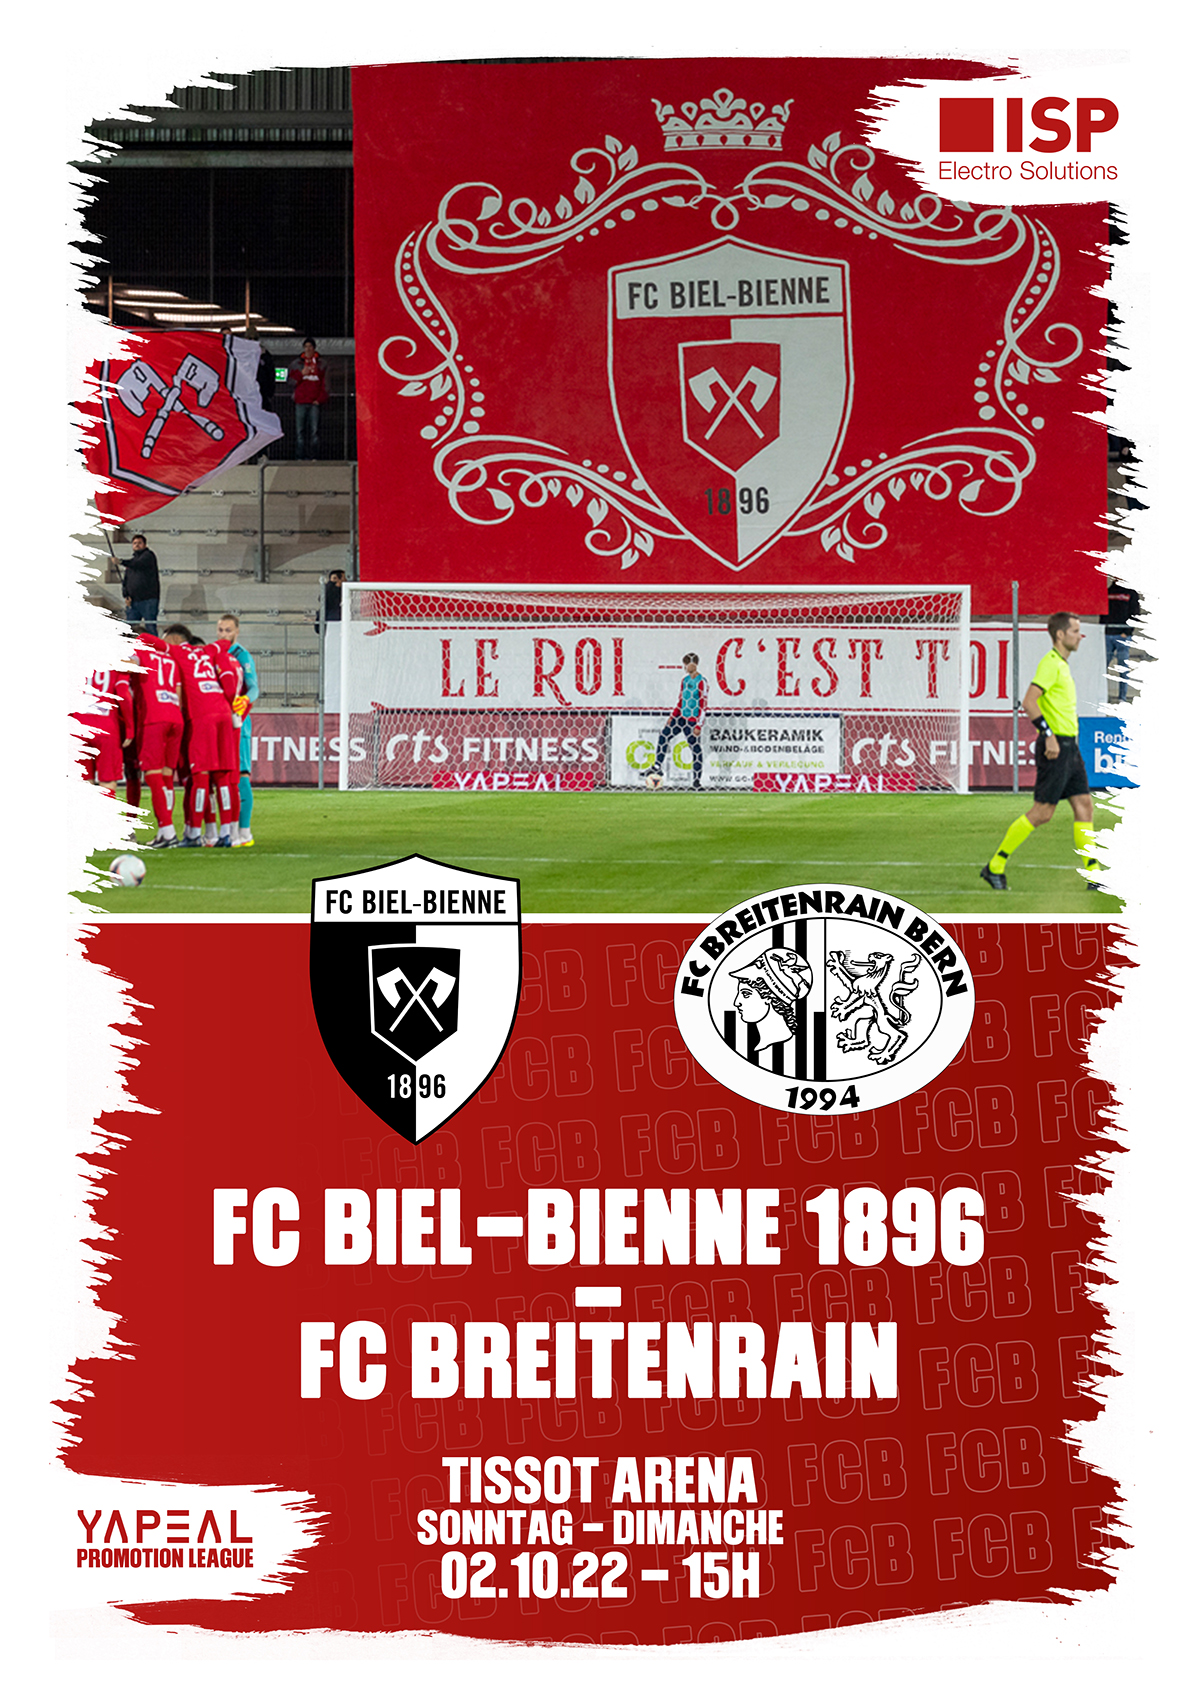 FC Biel-Bienne 1896 vs. FC Breitenrain